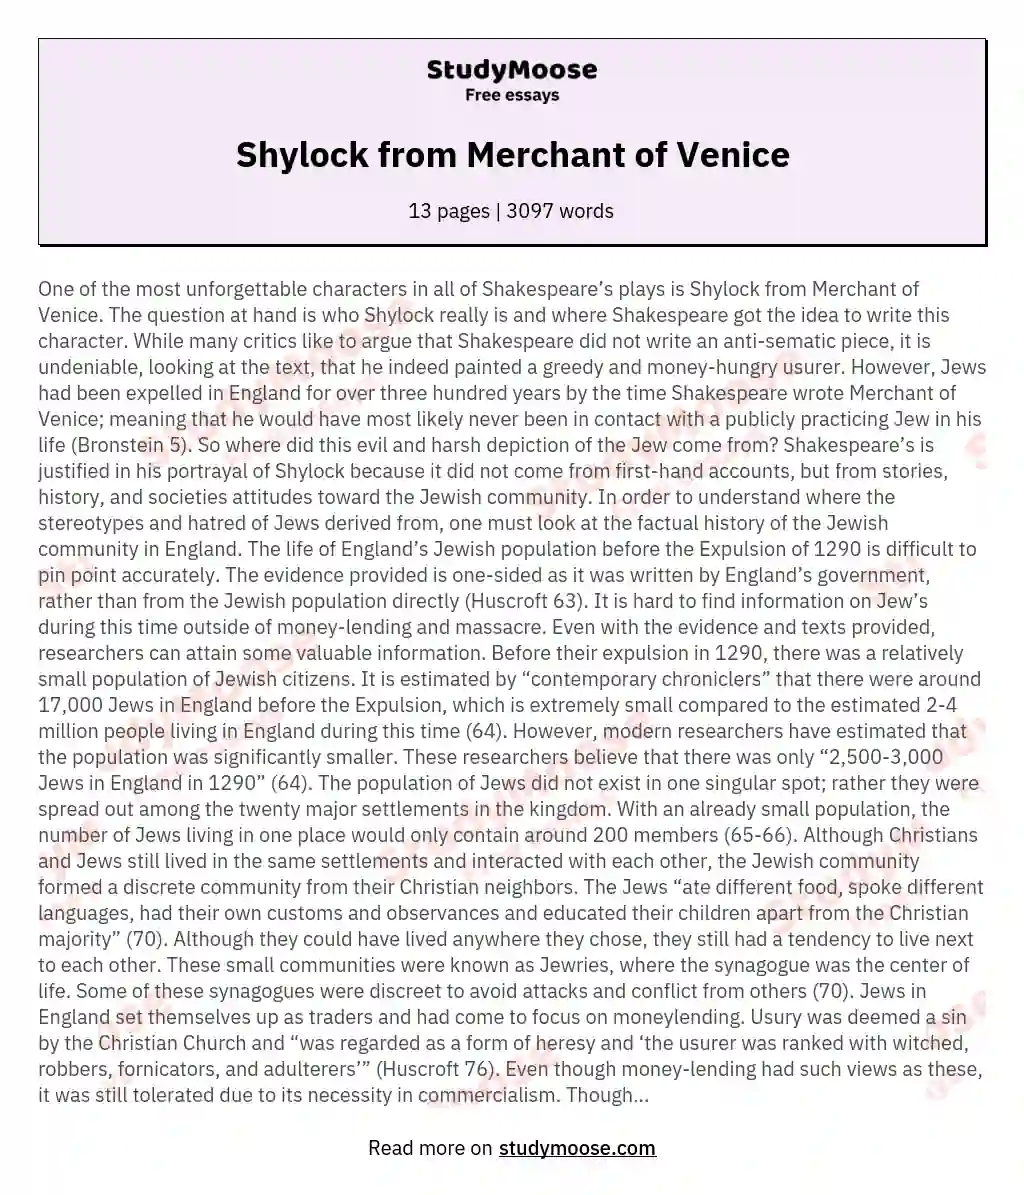 Shylock from Merchant of Venice essay